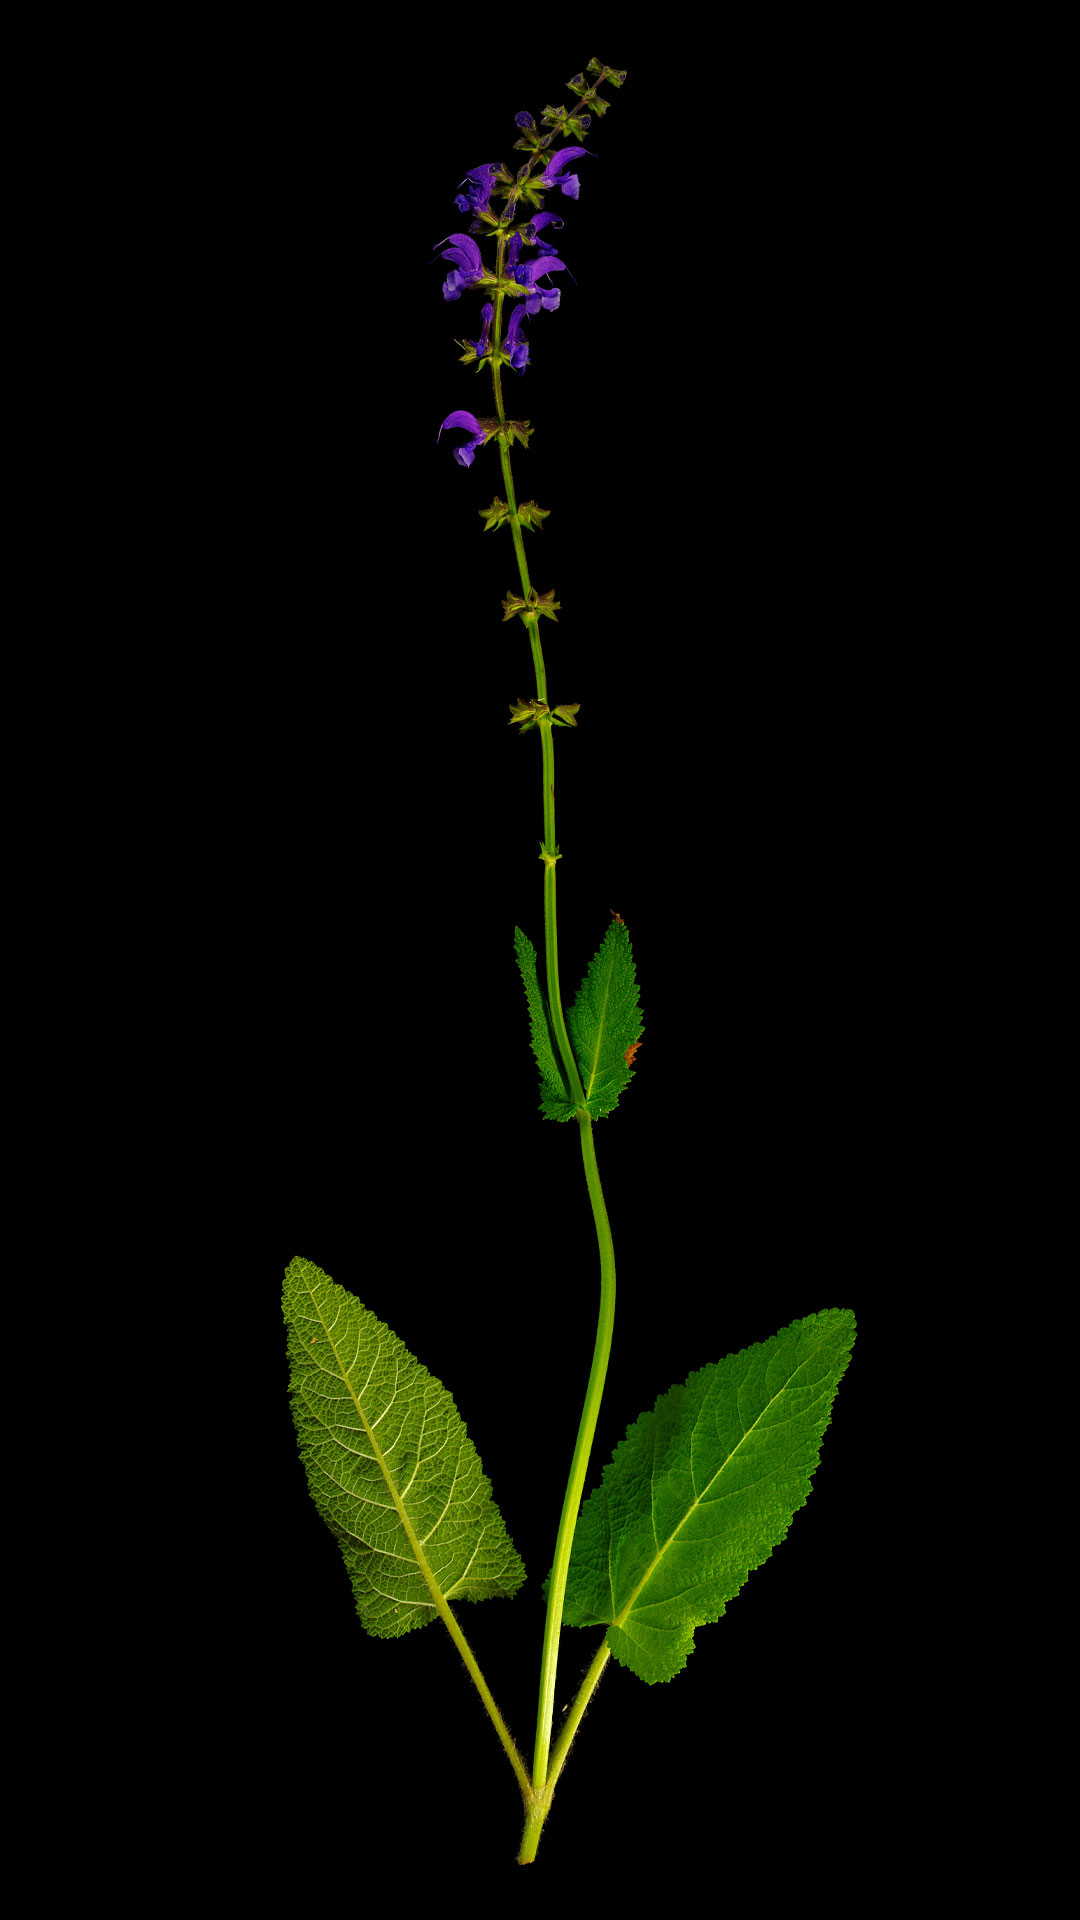 Meadow sage: Salvia pratensis